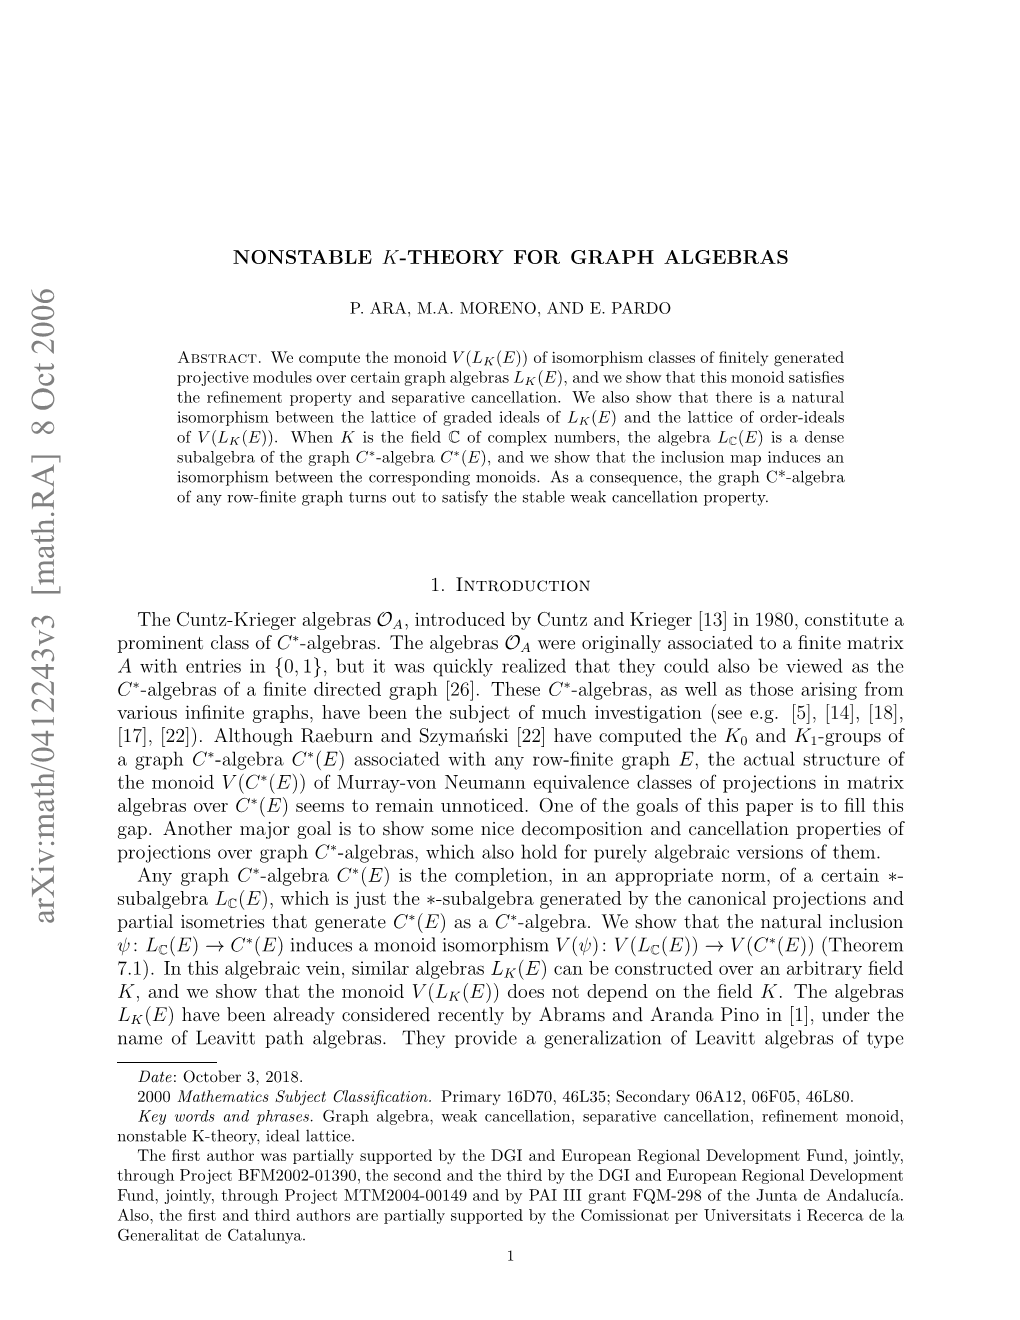 [Math.RA] 8 Oct 2006 .) Nti Leri En Iia Algebras Similar Vein, Algebraic This in 7.1)